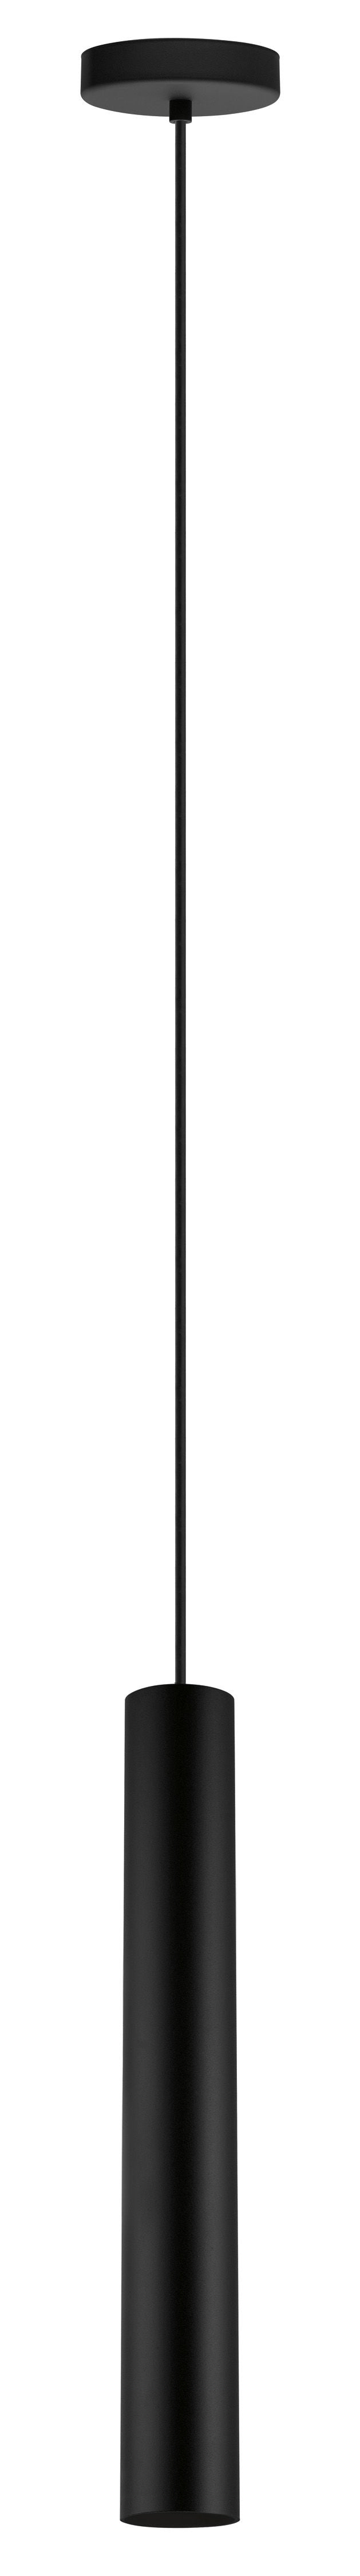 Tortoreto Suspension simple Noir - 62547A | EGLO